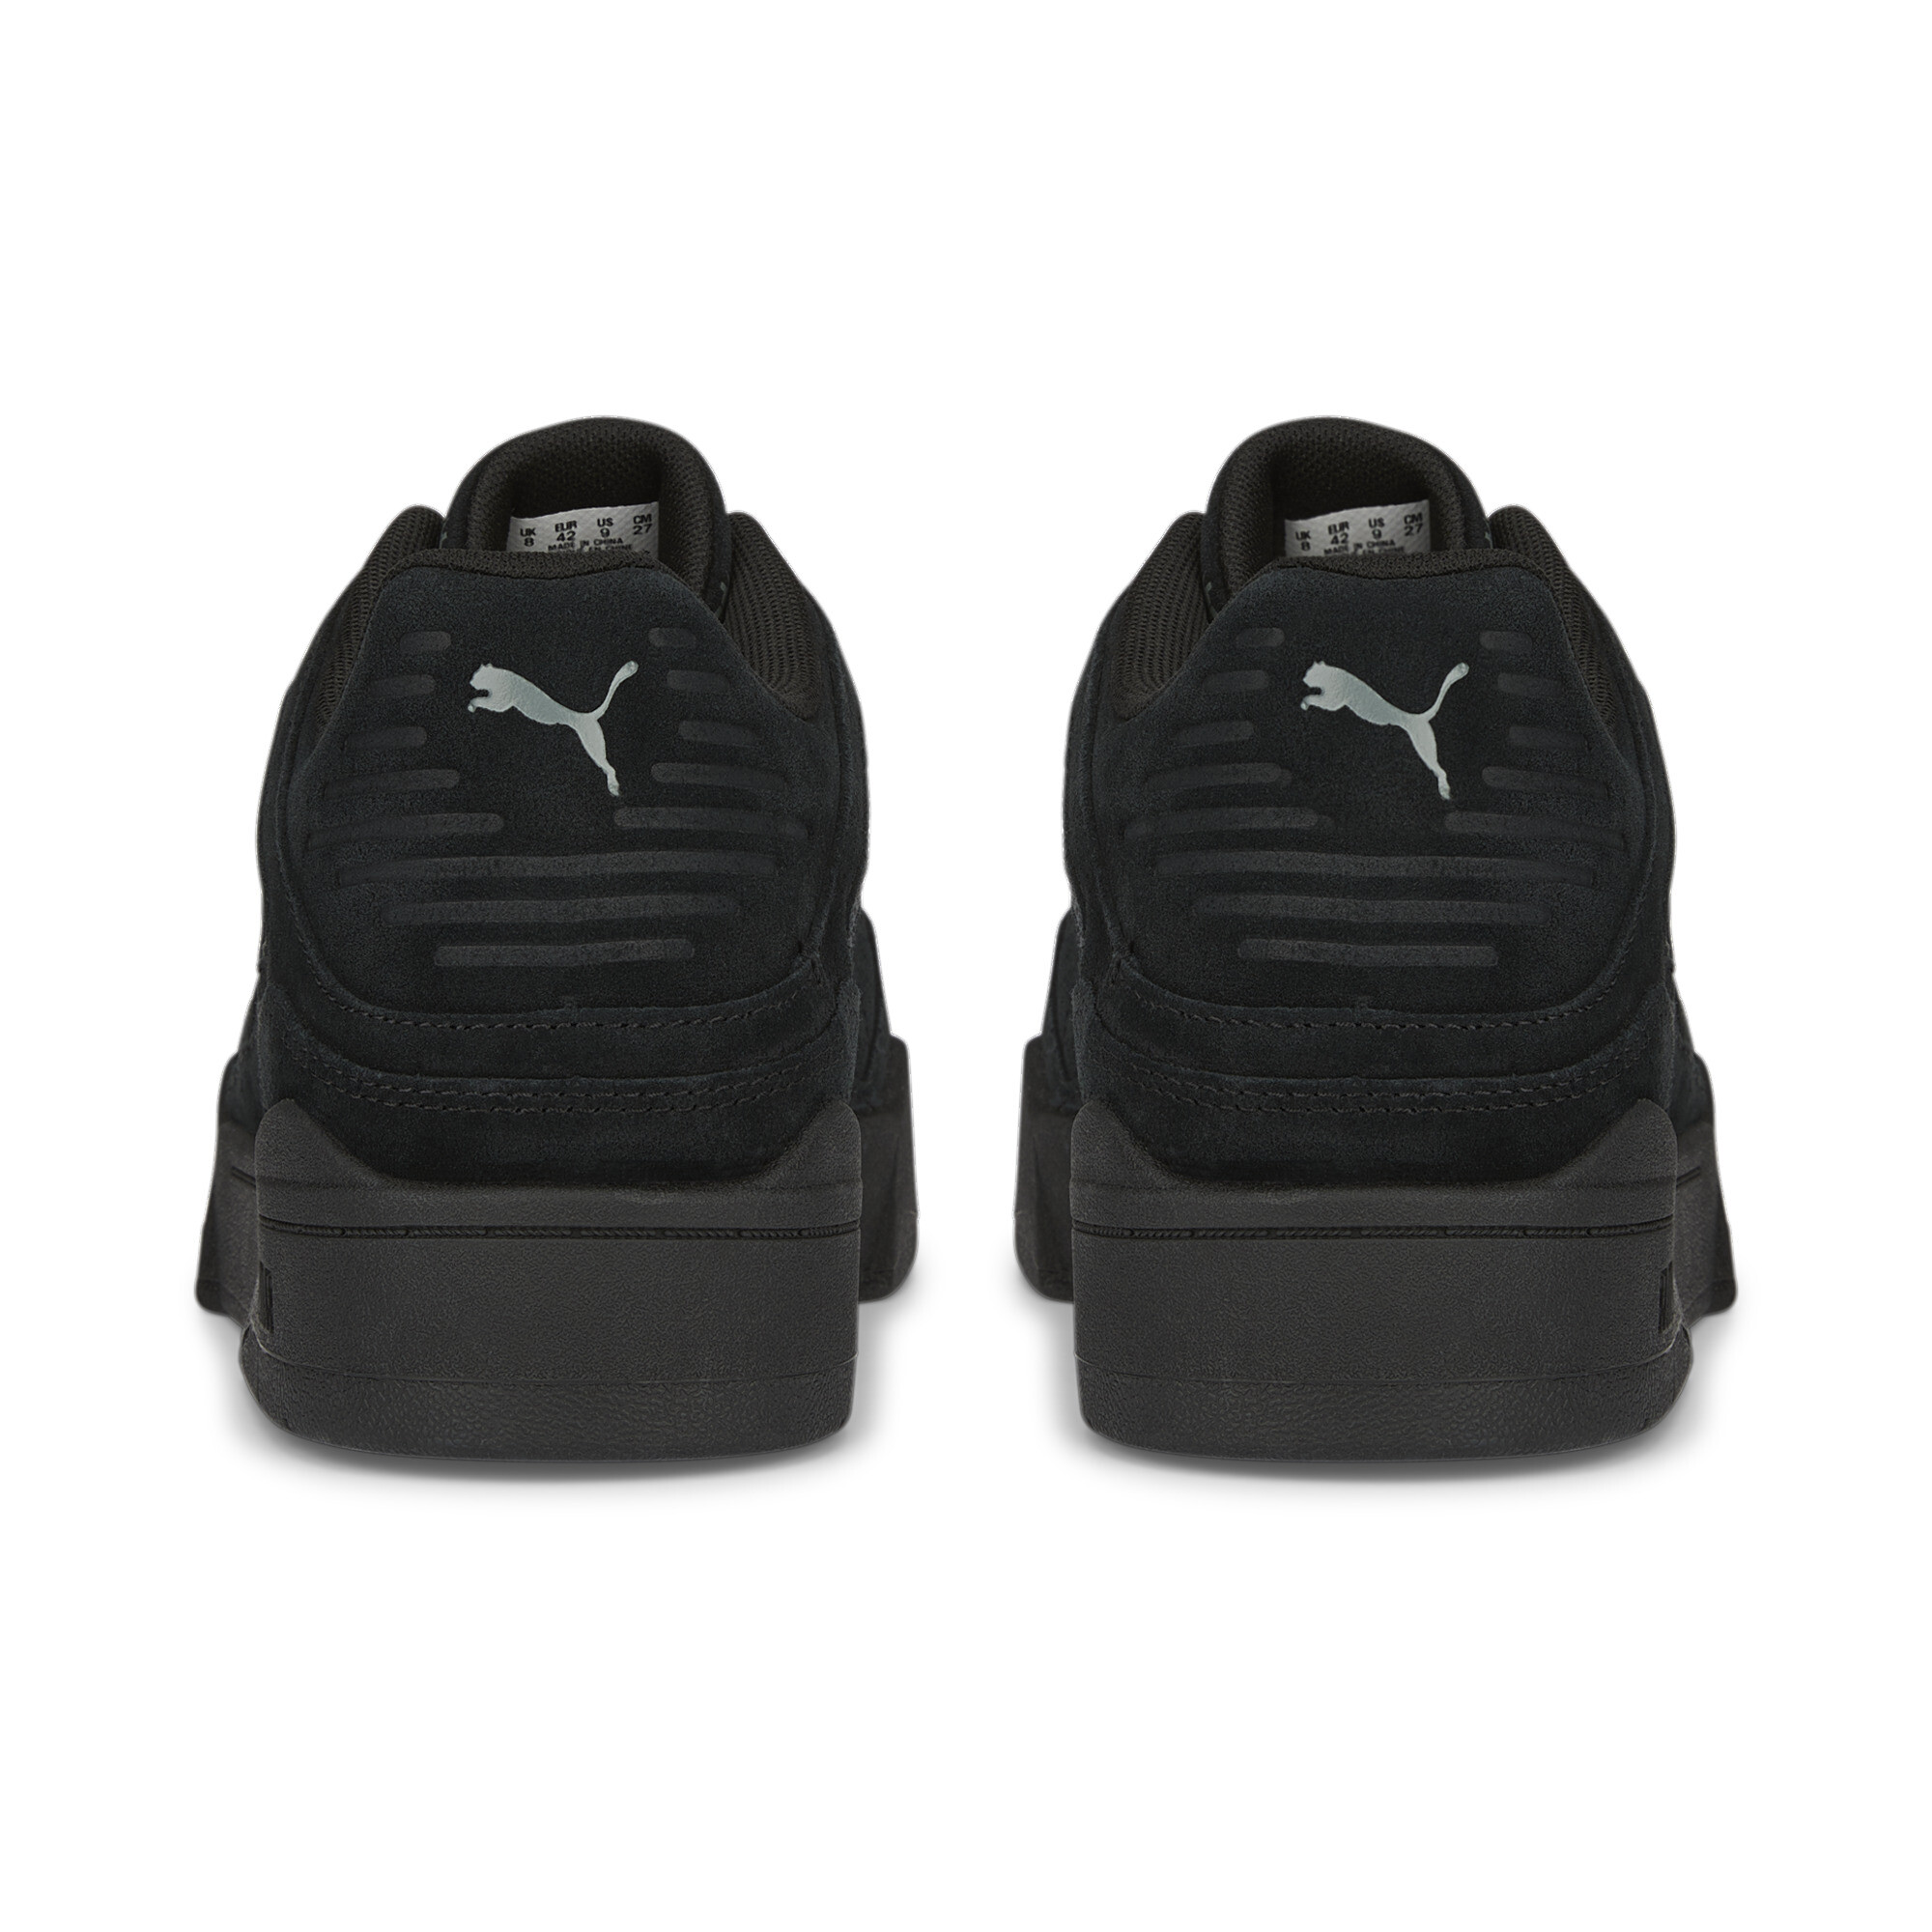 Men's PUMA Slipstream Trend 7etter Sneakers In Black, Size EU 43